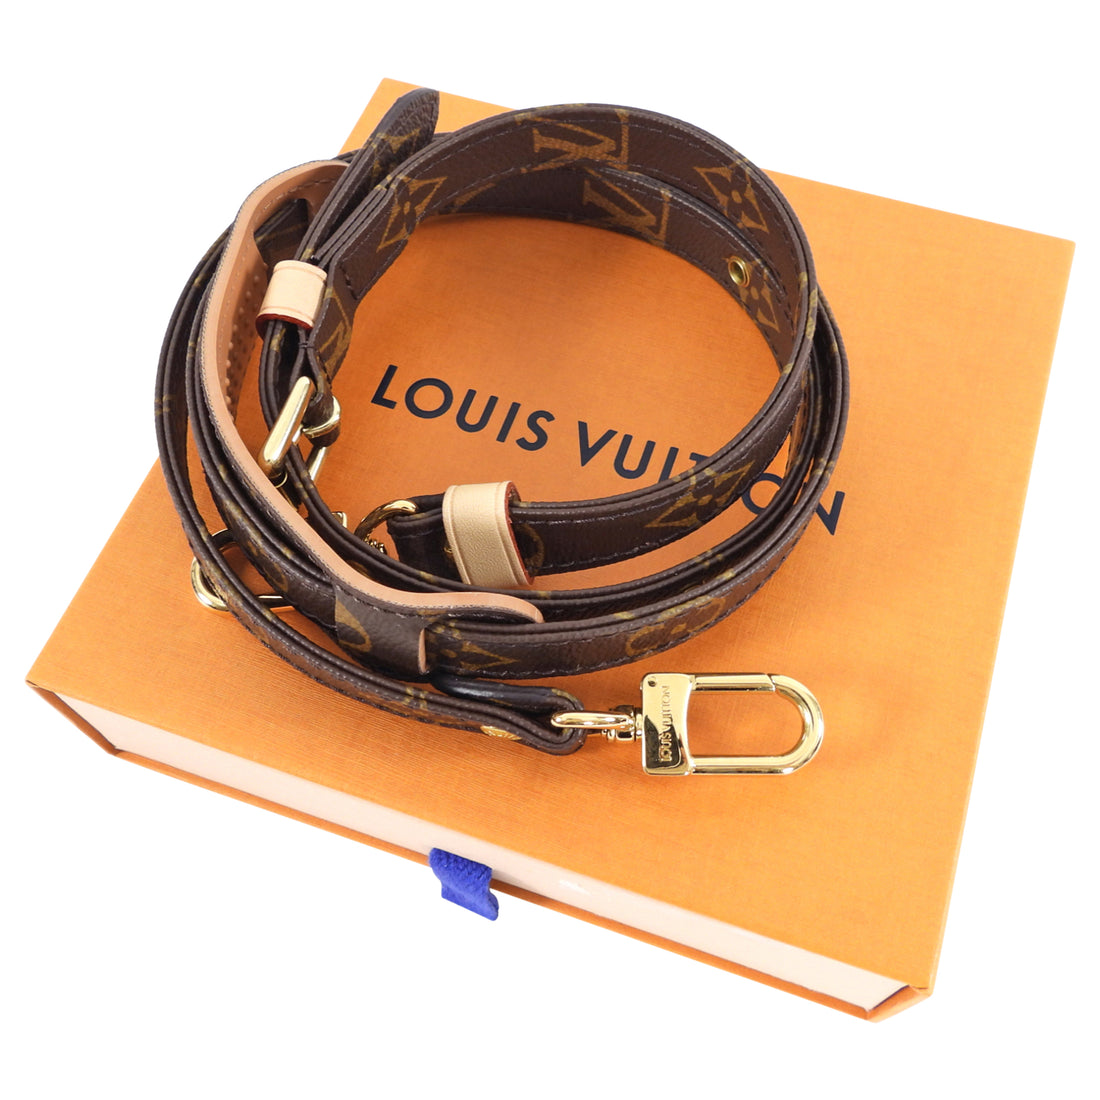 LOUIS VUITTON LV ADJUSTABLE SHOULDER STRAP 16MM MONOGRAM, Luxury